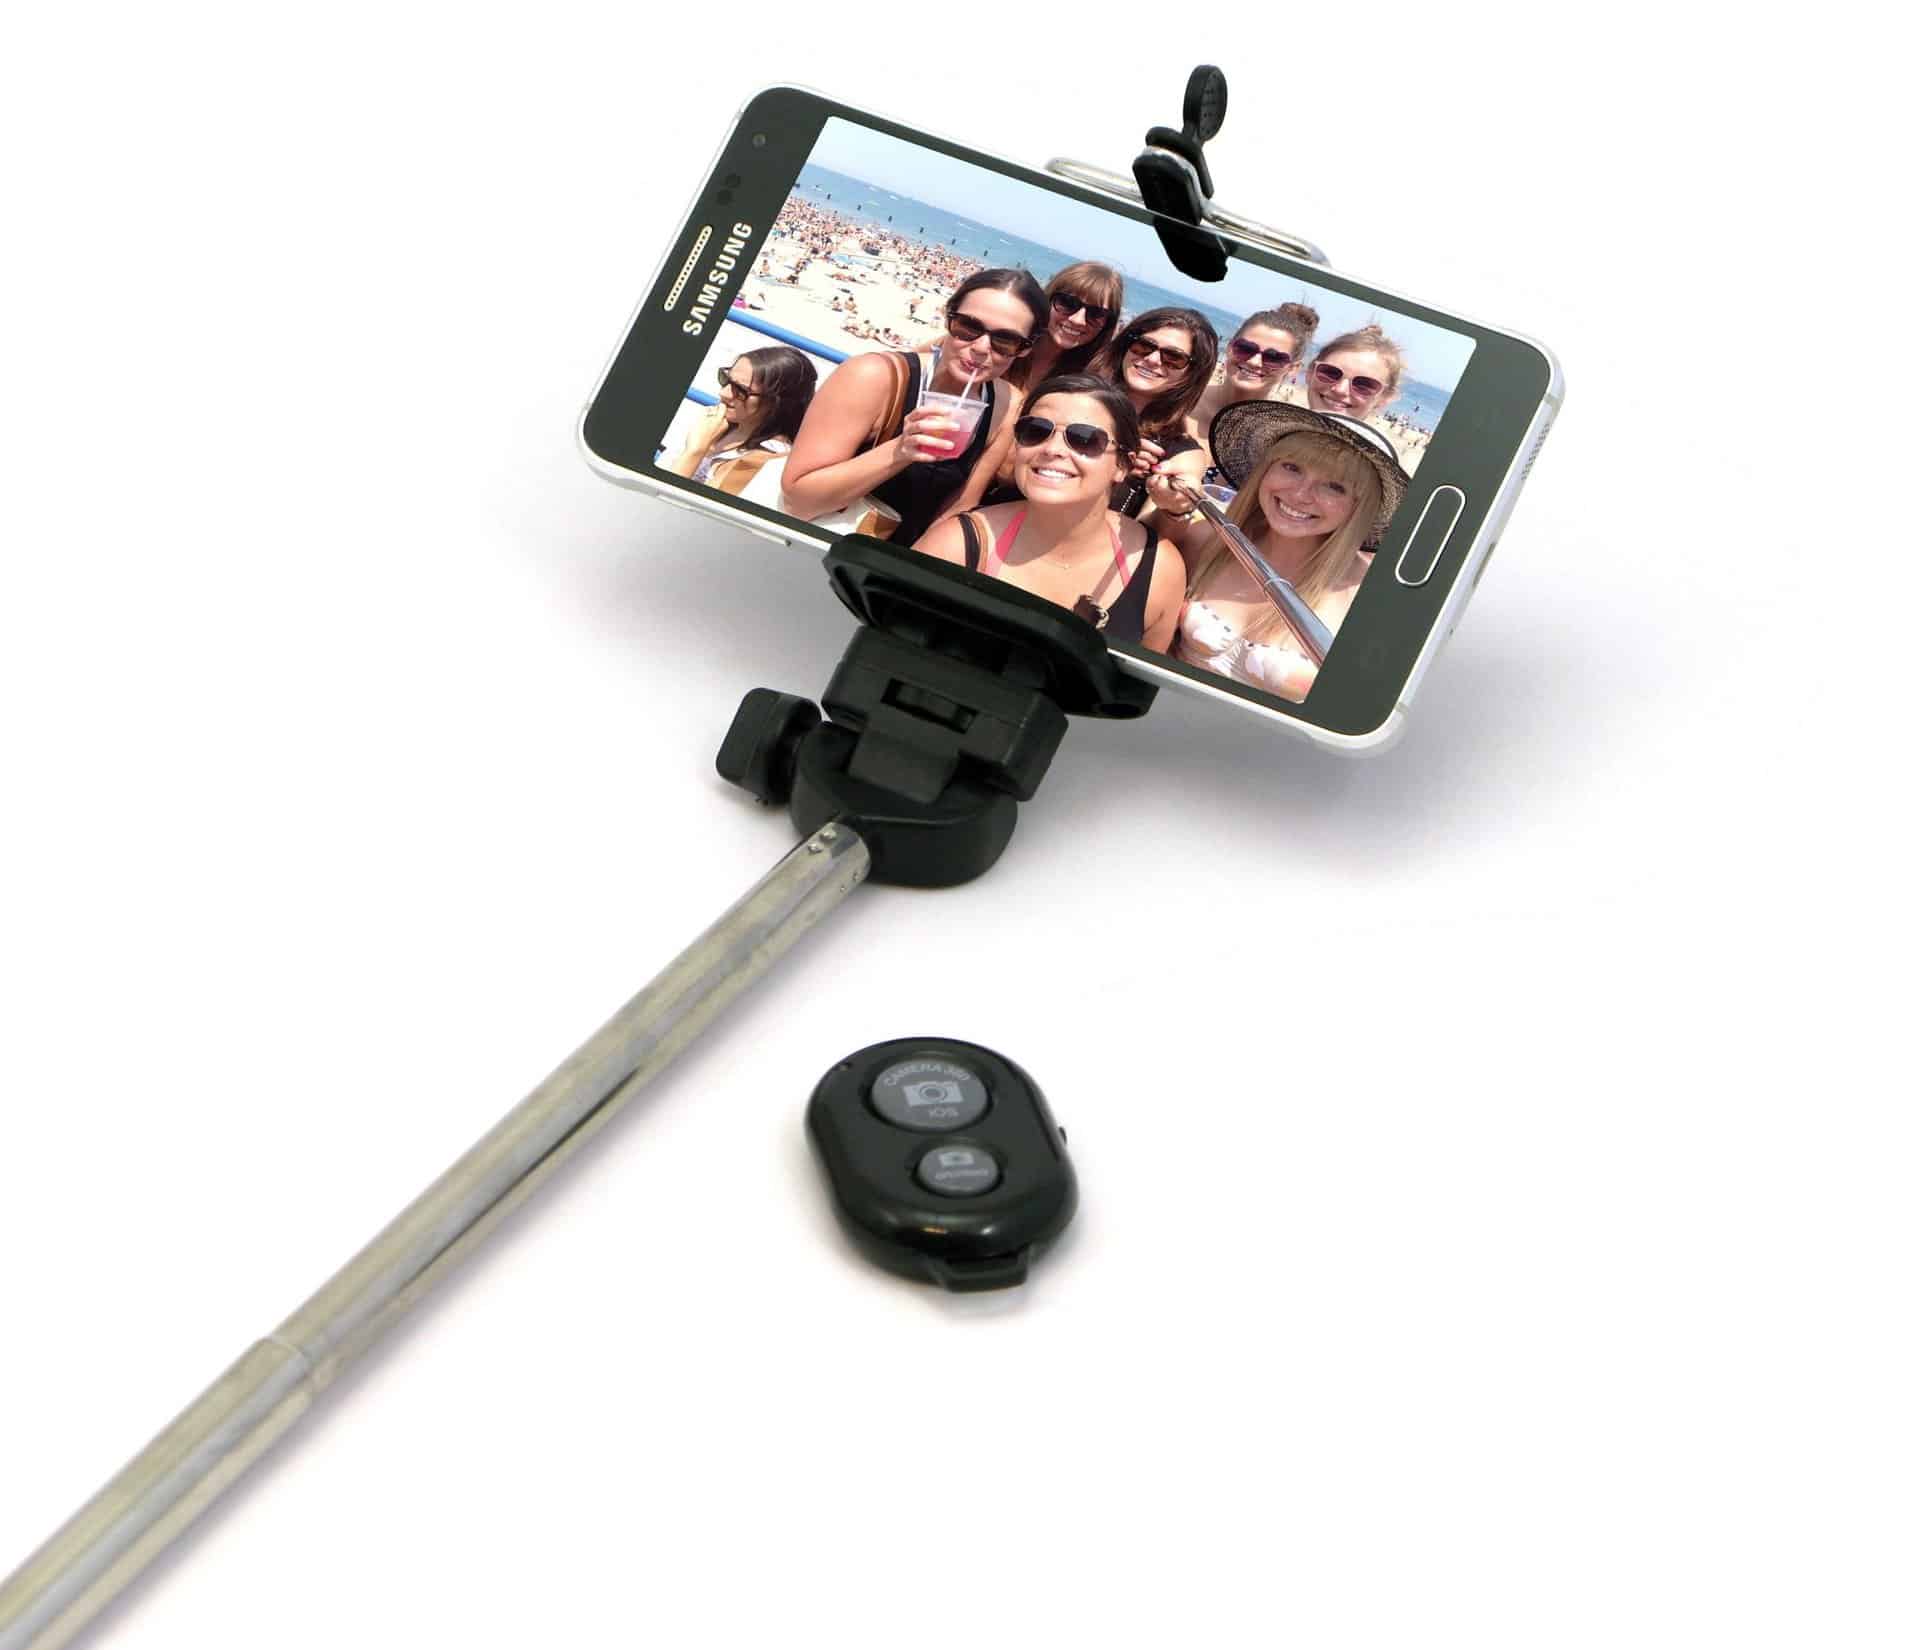 Bullit Selfie Stick Remote Control